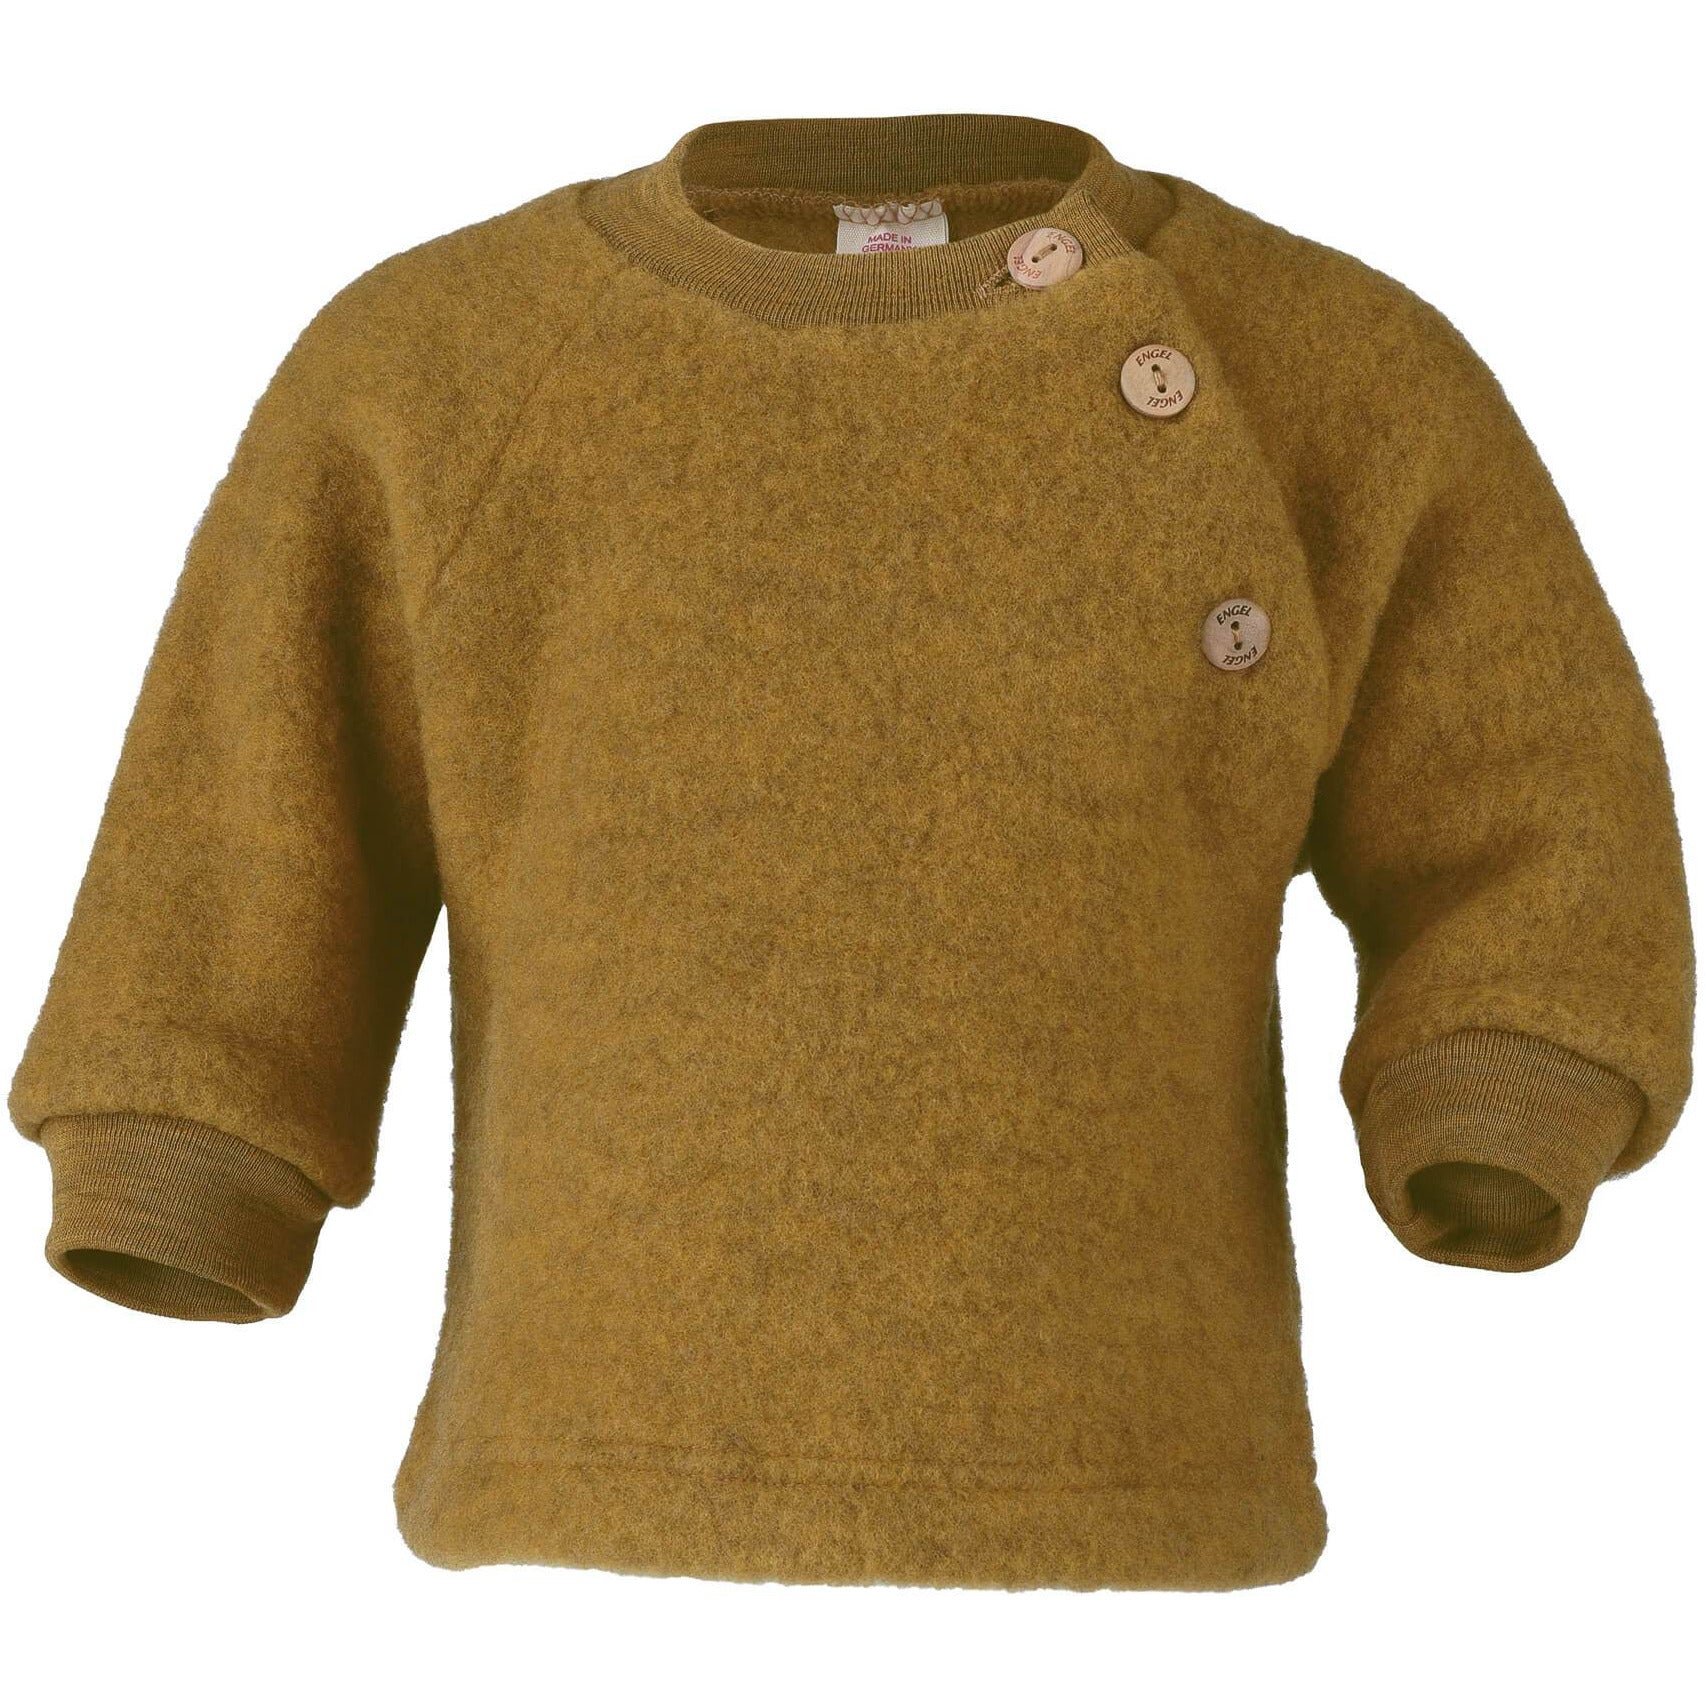 Pulover copii Engel din fleece de lana merinos 100% organica cu nasturi de lemn, Sofran Melange